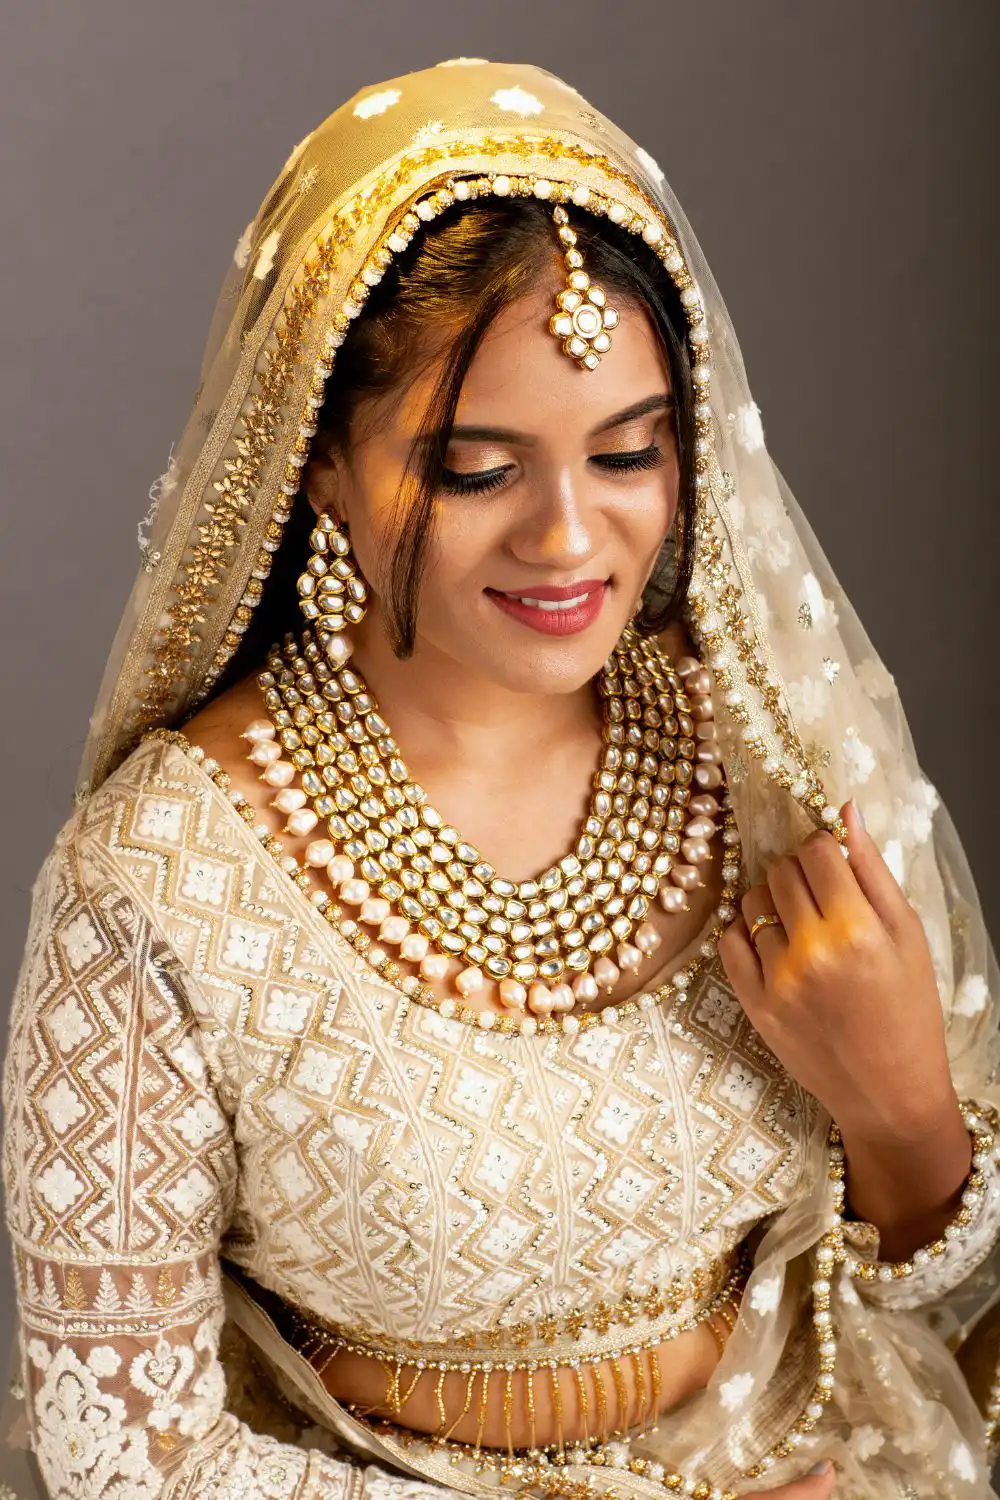 Woman Wearing Bridal Jewelry